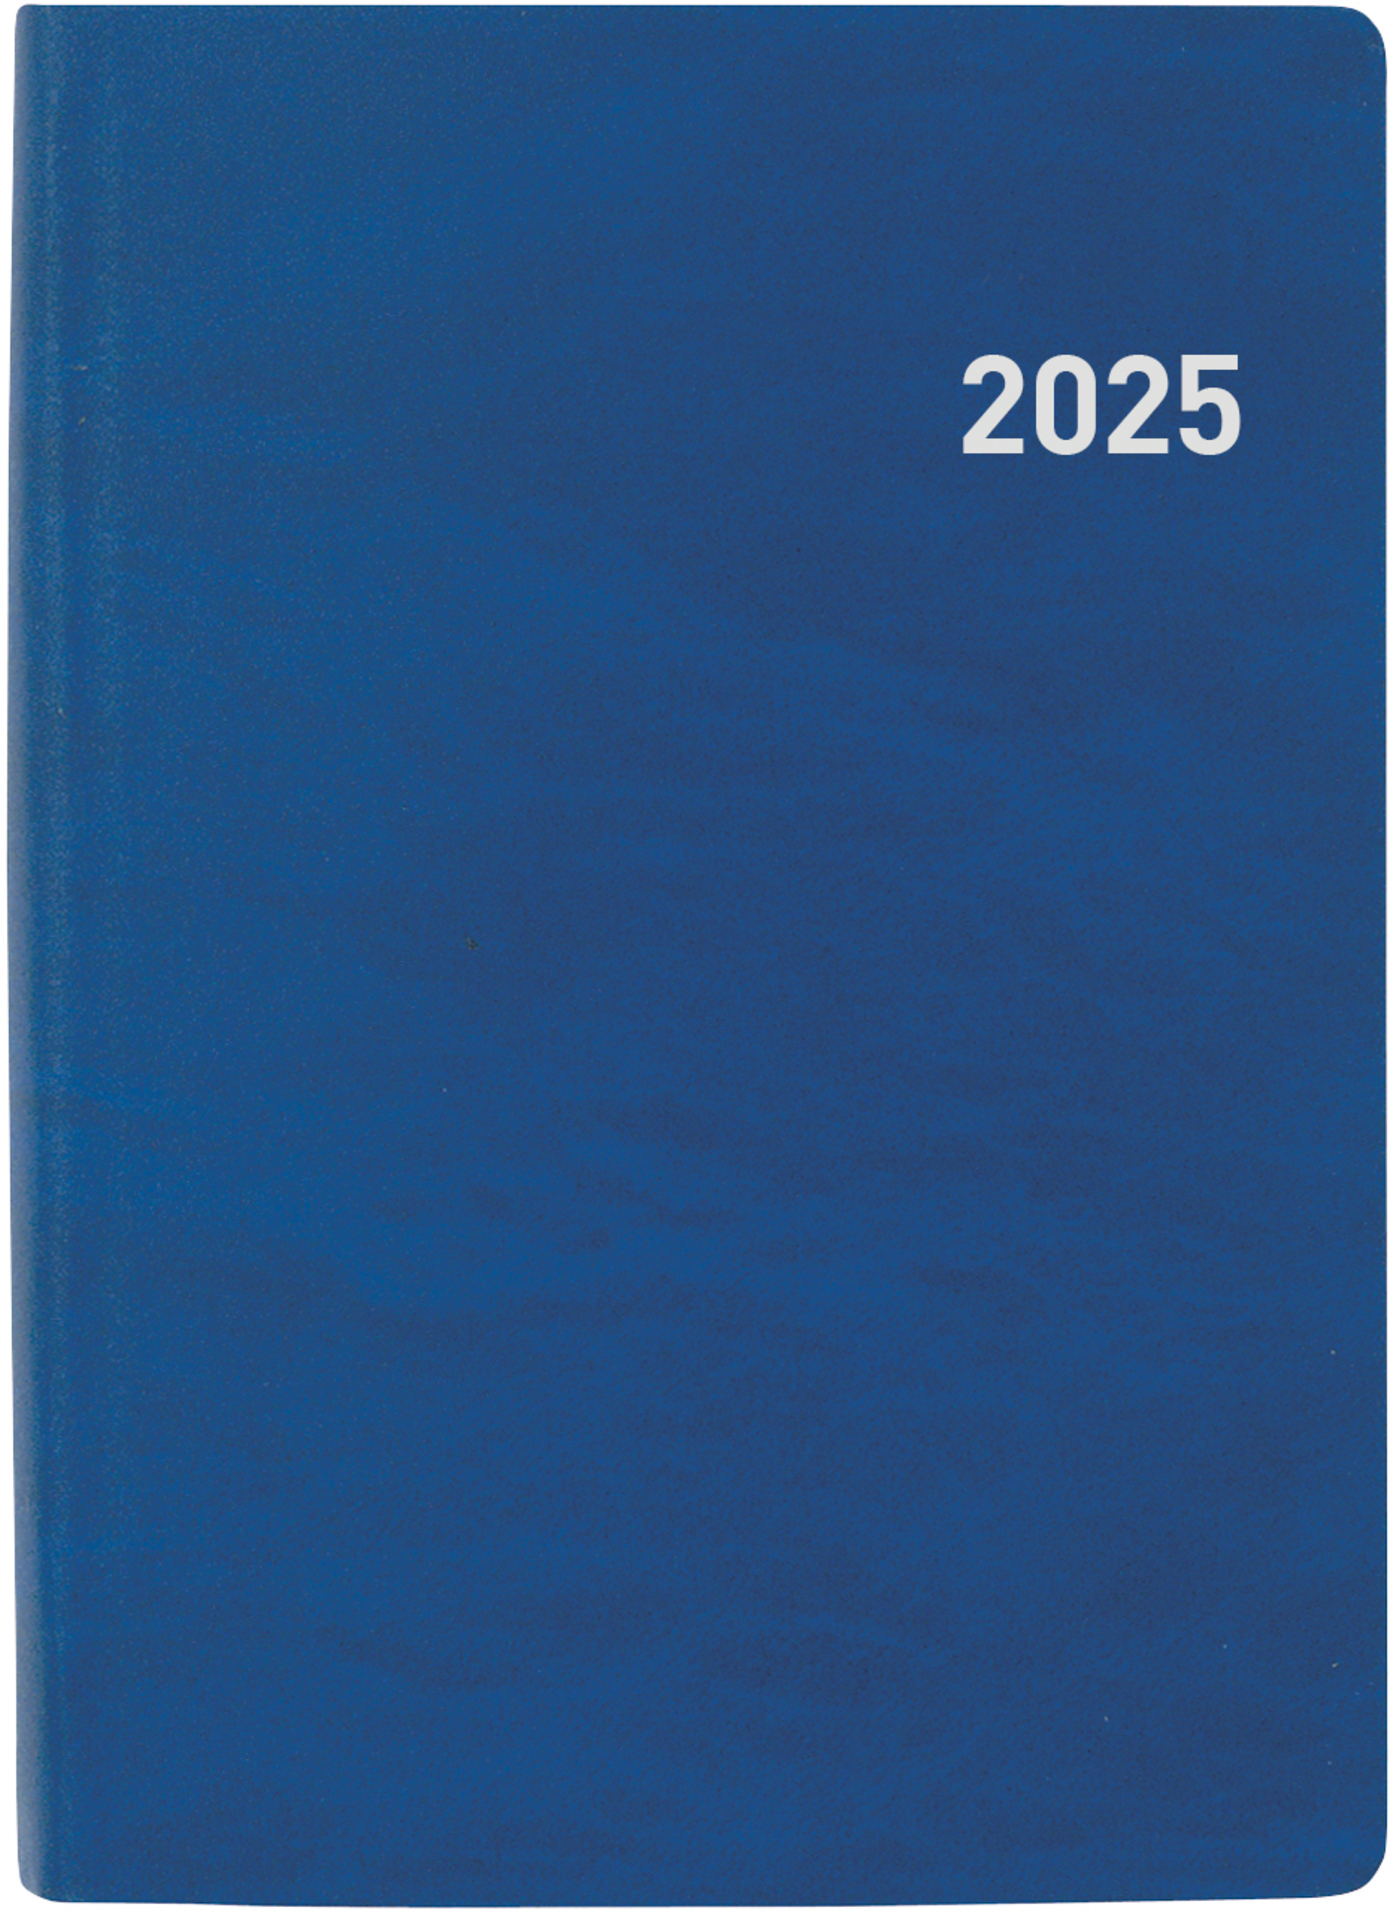 BIELLA Agenda Memento 2025 825401050025 1S/2P bleu ML 10.1x14.2cm 1S/2P bleu ML 10.1x14.2cm